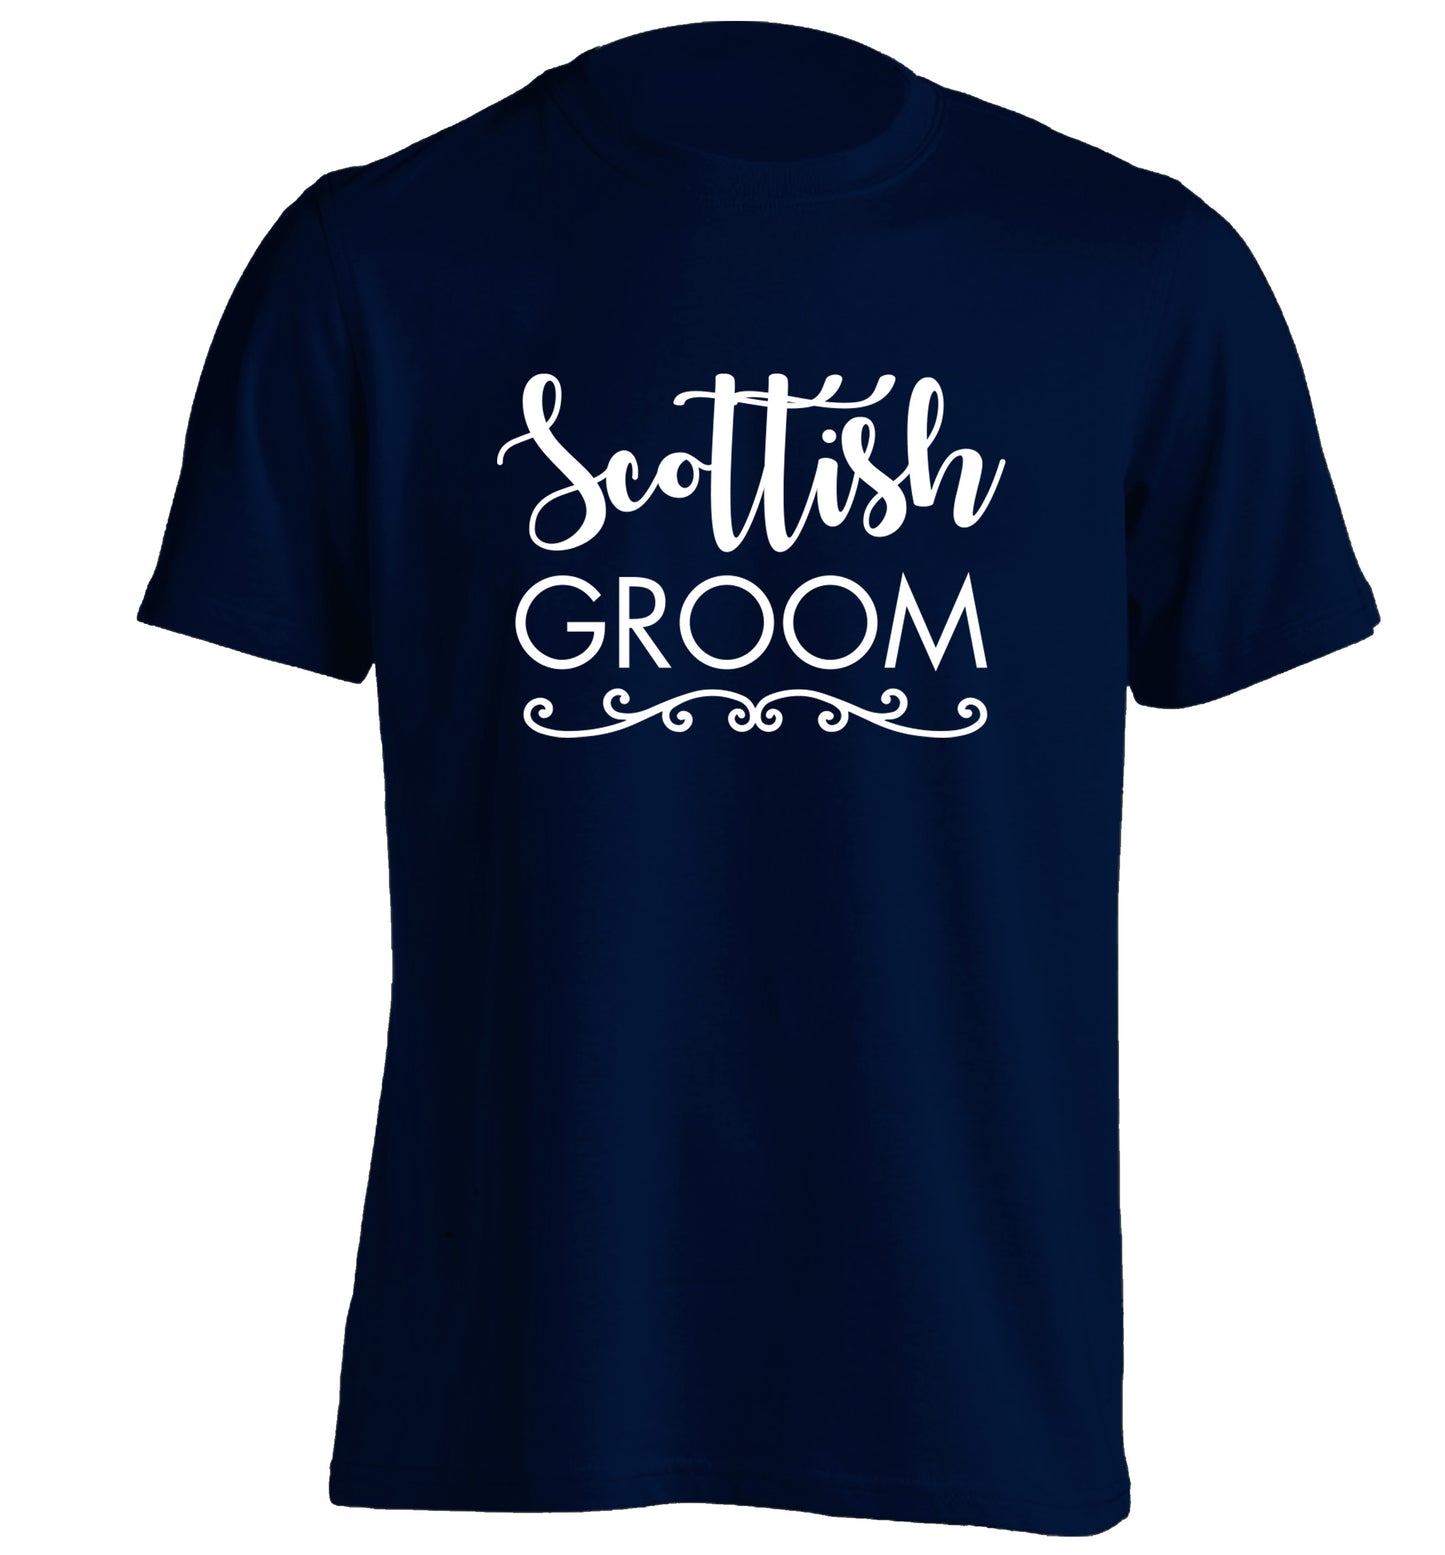 Scottish groom adults unisex navy Tshirt 2XL